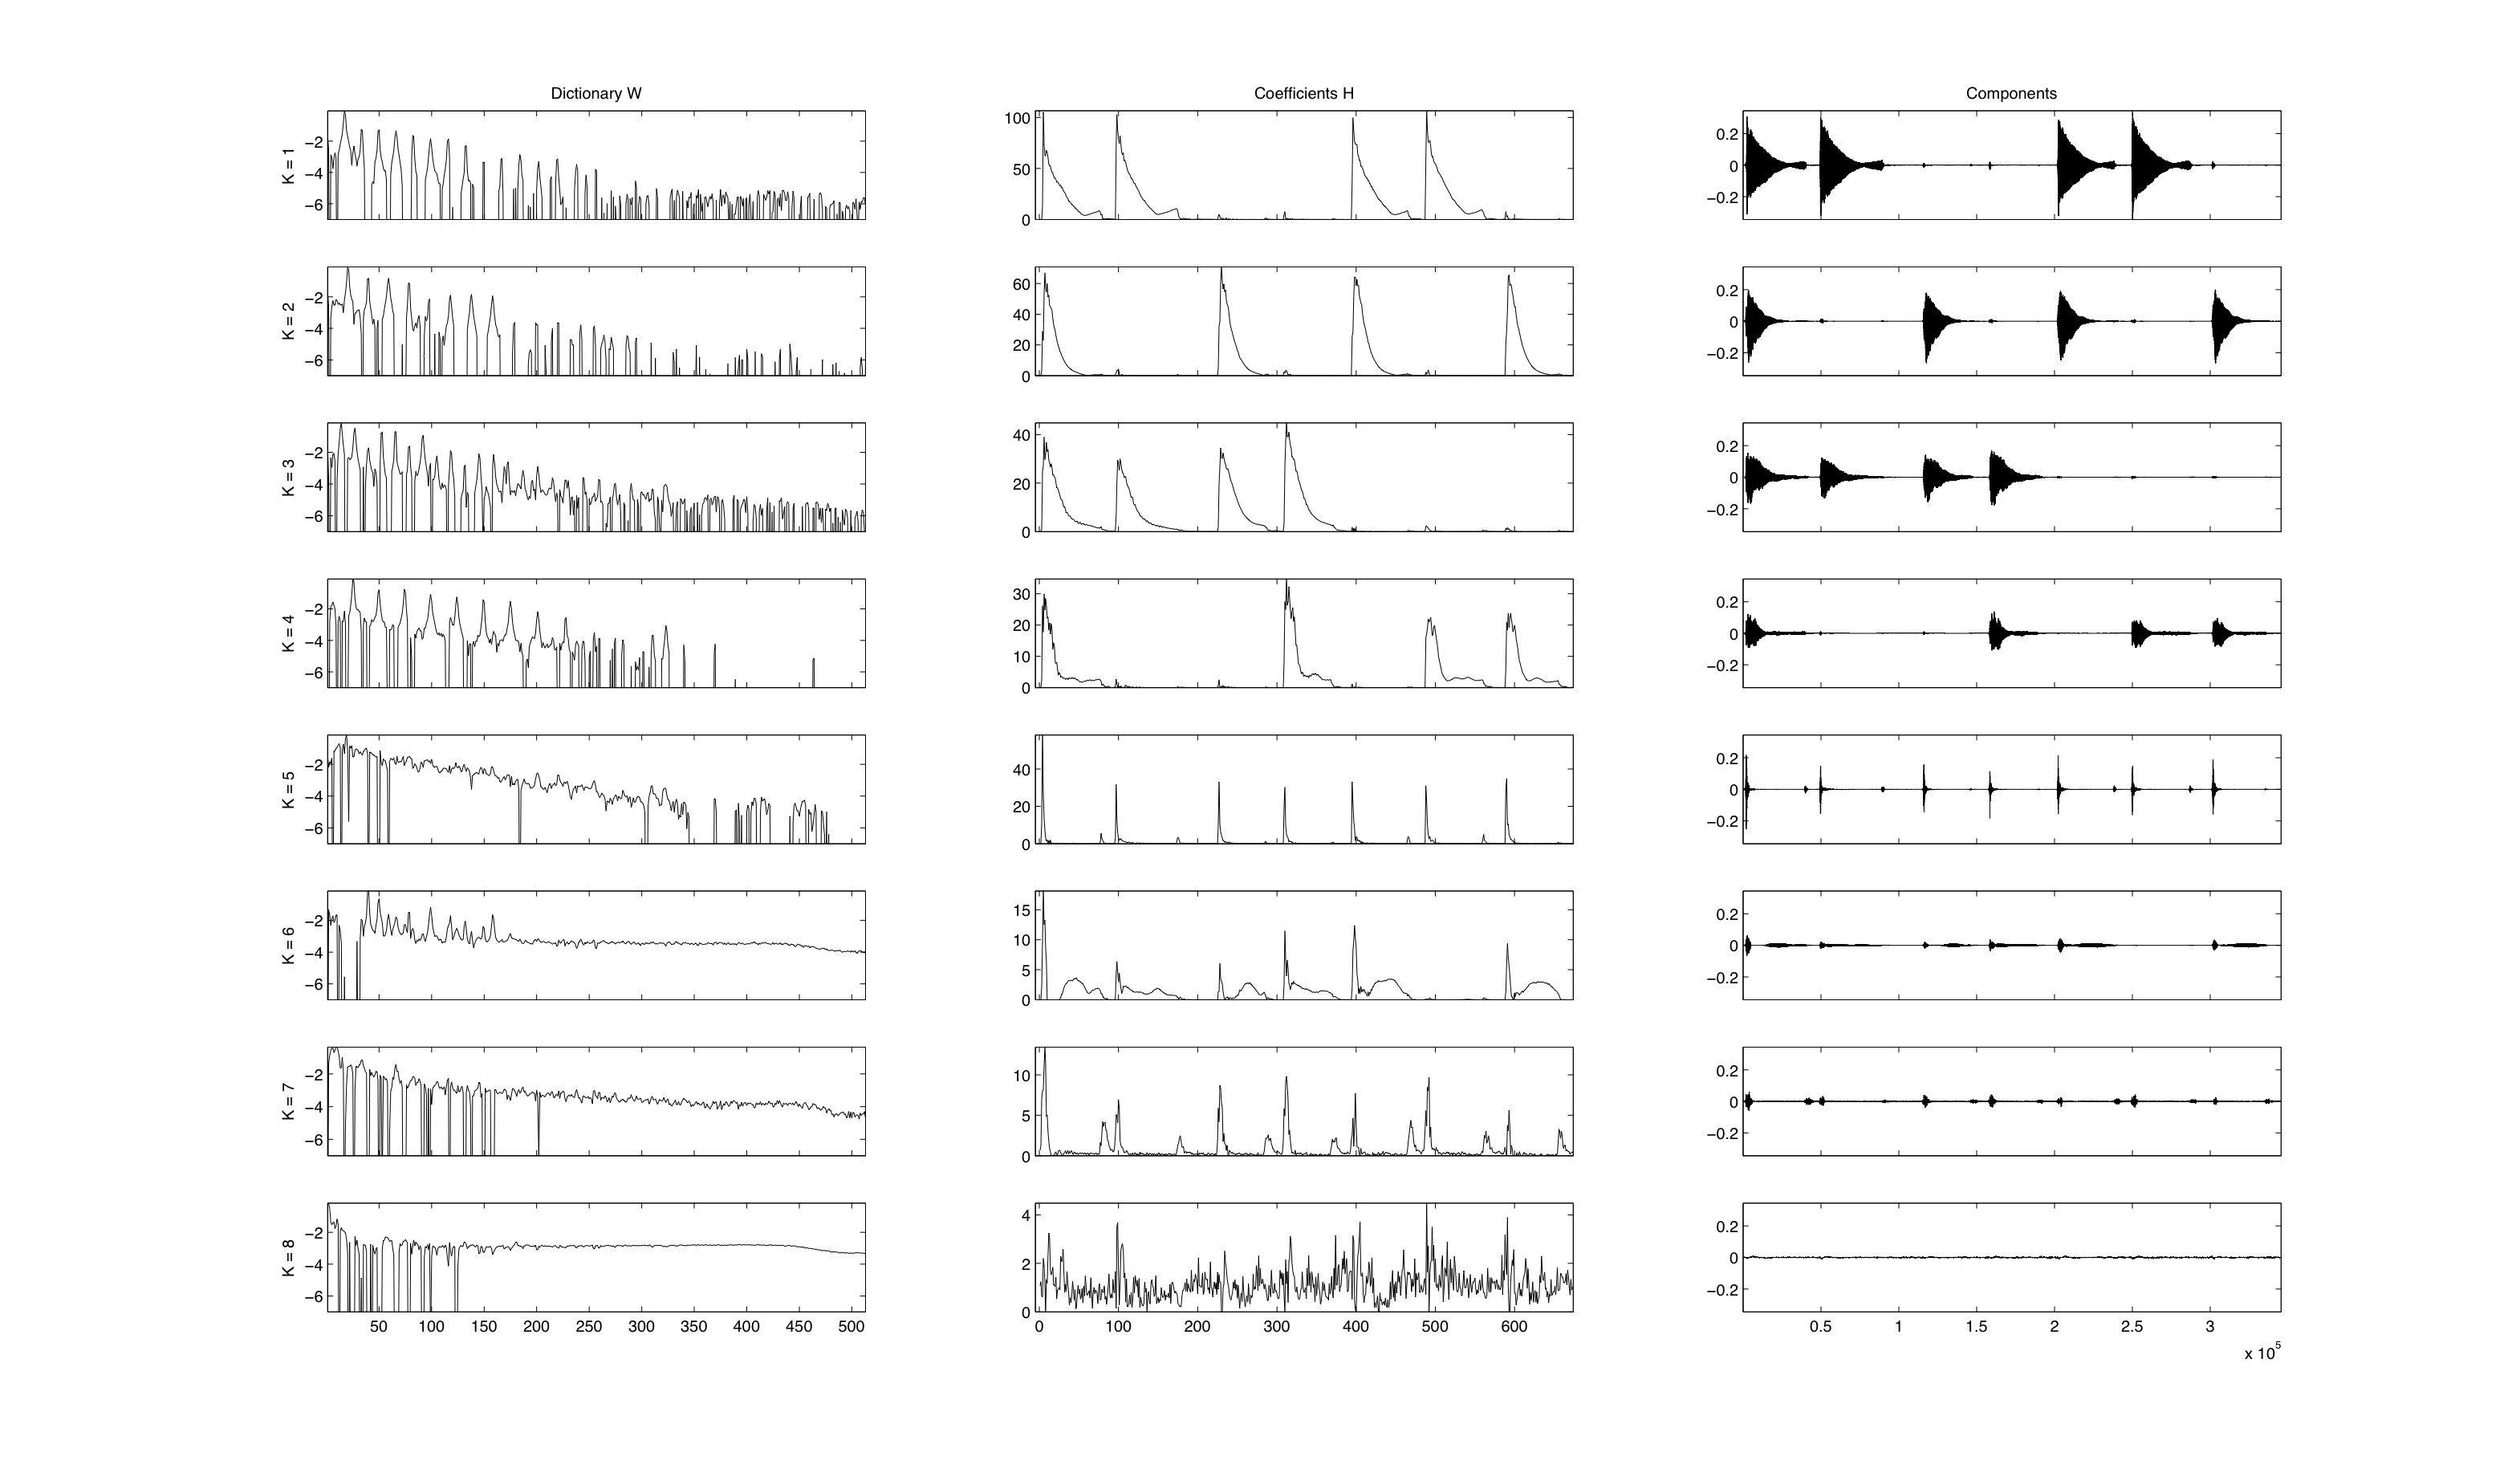 KL-NMF on magnitude spectrogram